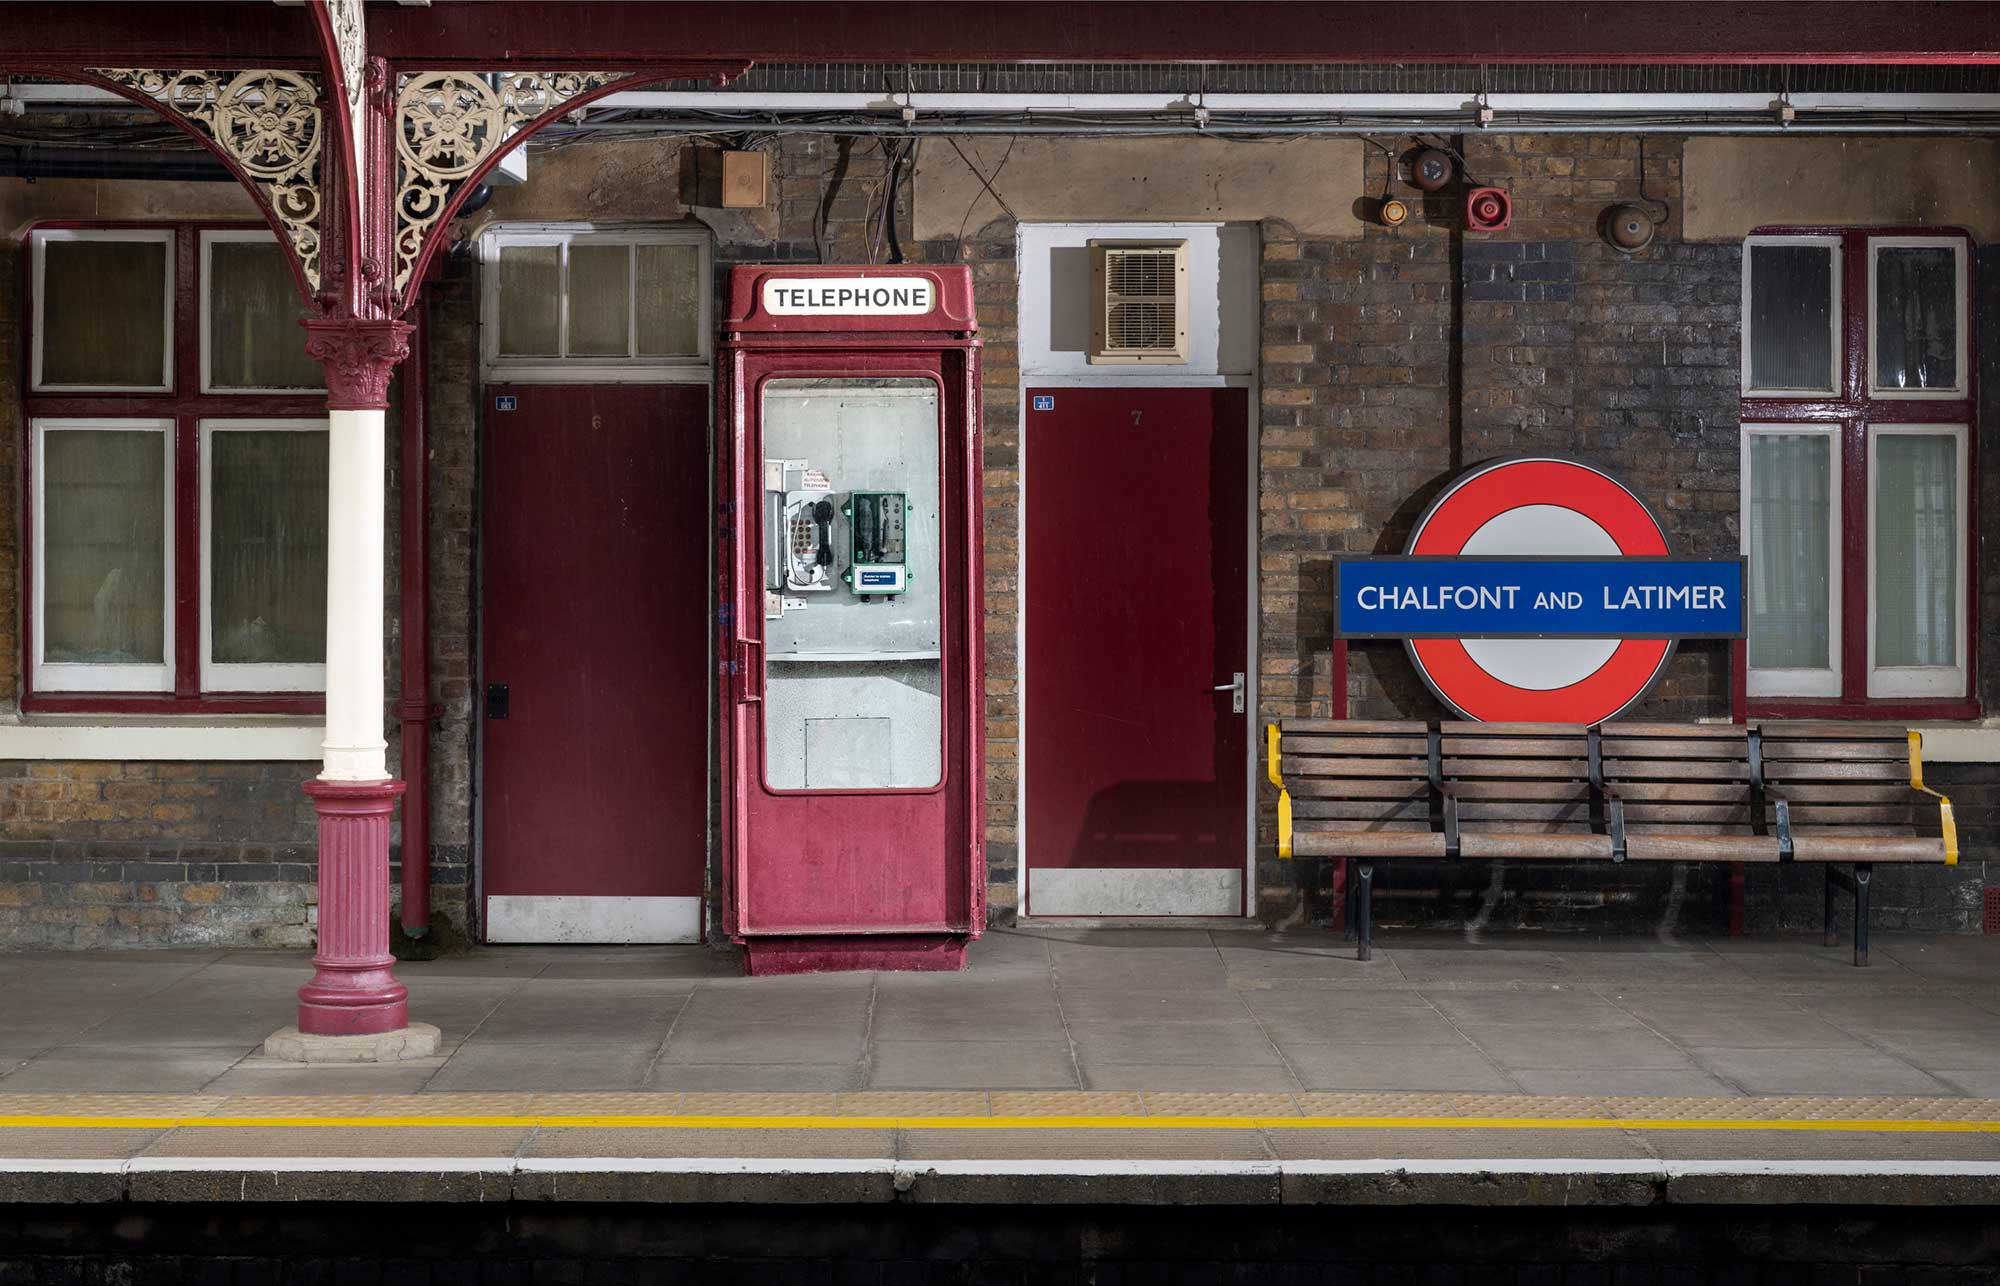 A telephone kiosk painted maroon on a railway station platform alongside seats.